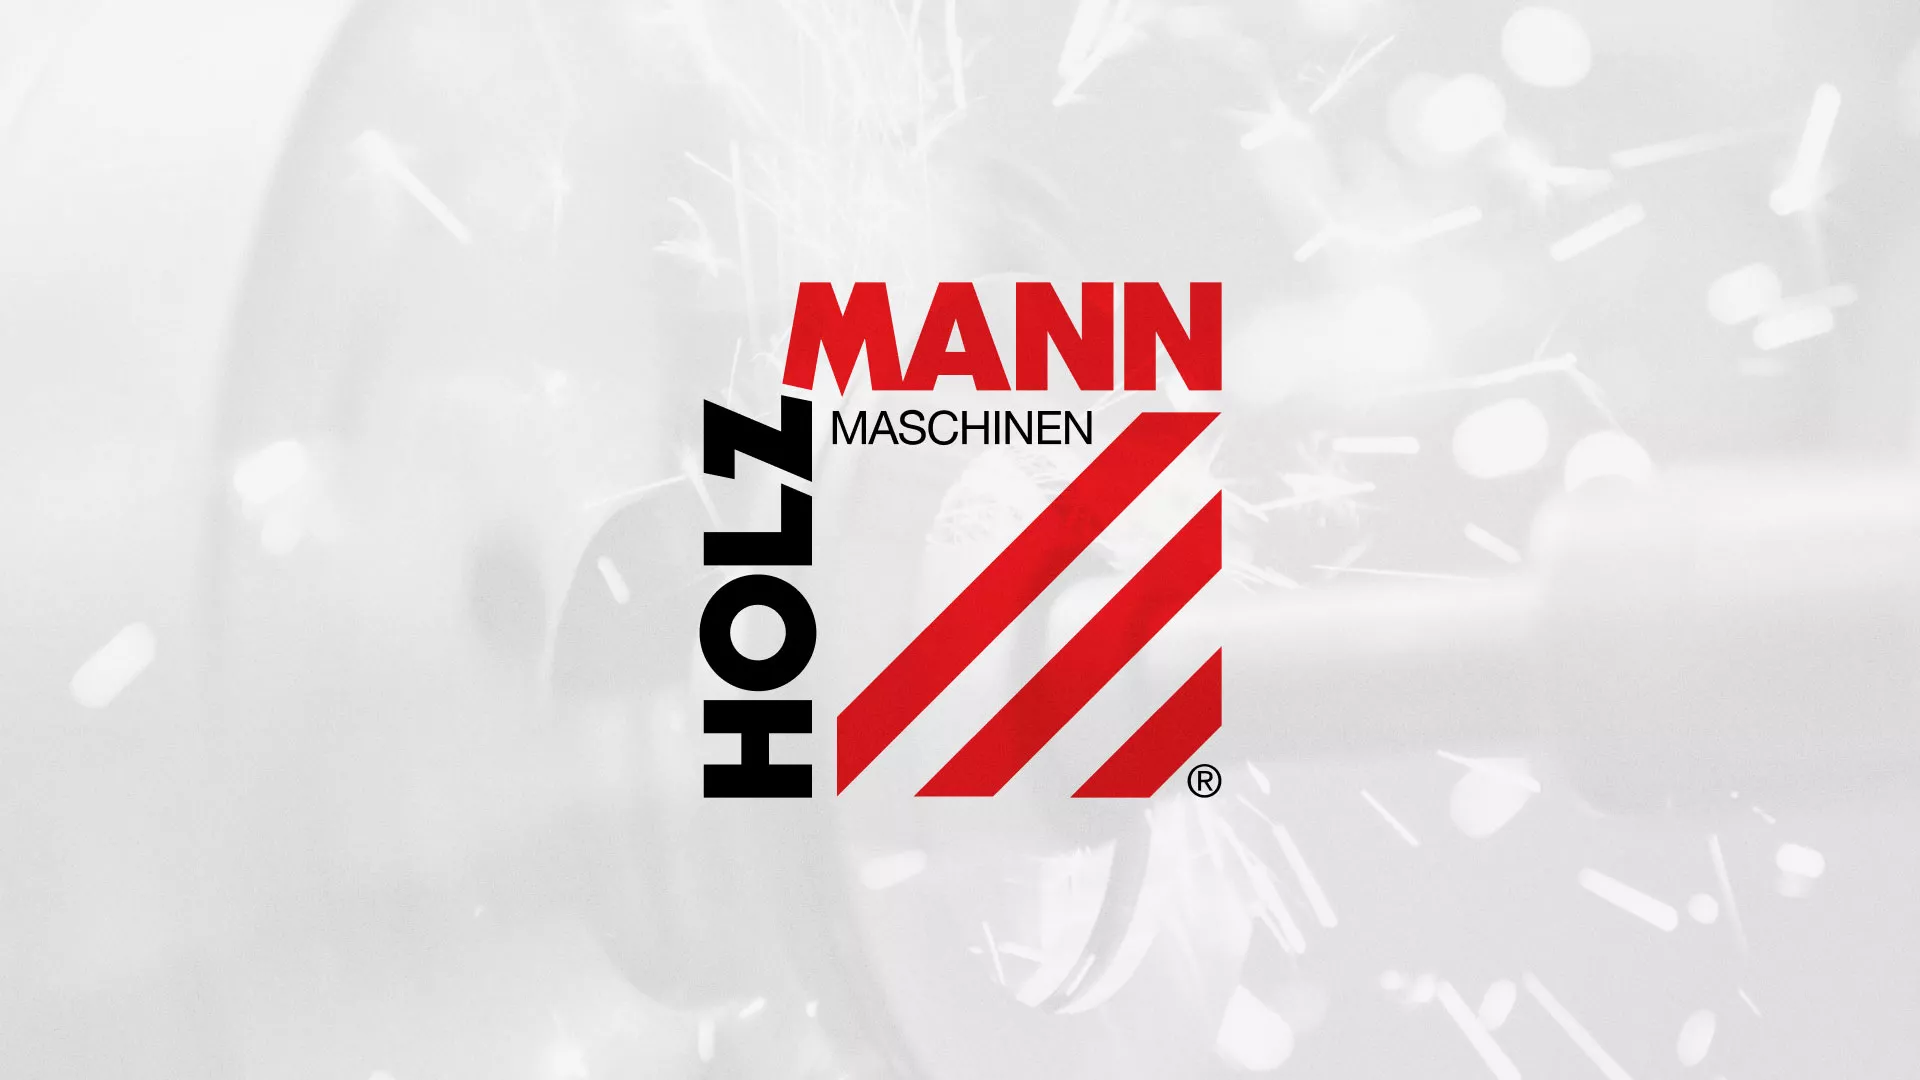 Создание сайта компании «HOLZMANN Maschinen GmbH» в Иркутске